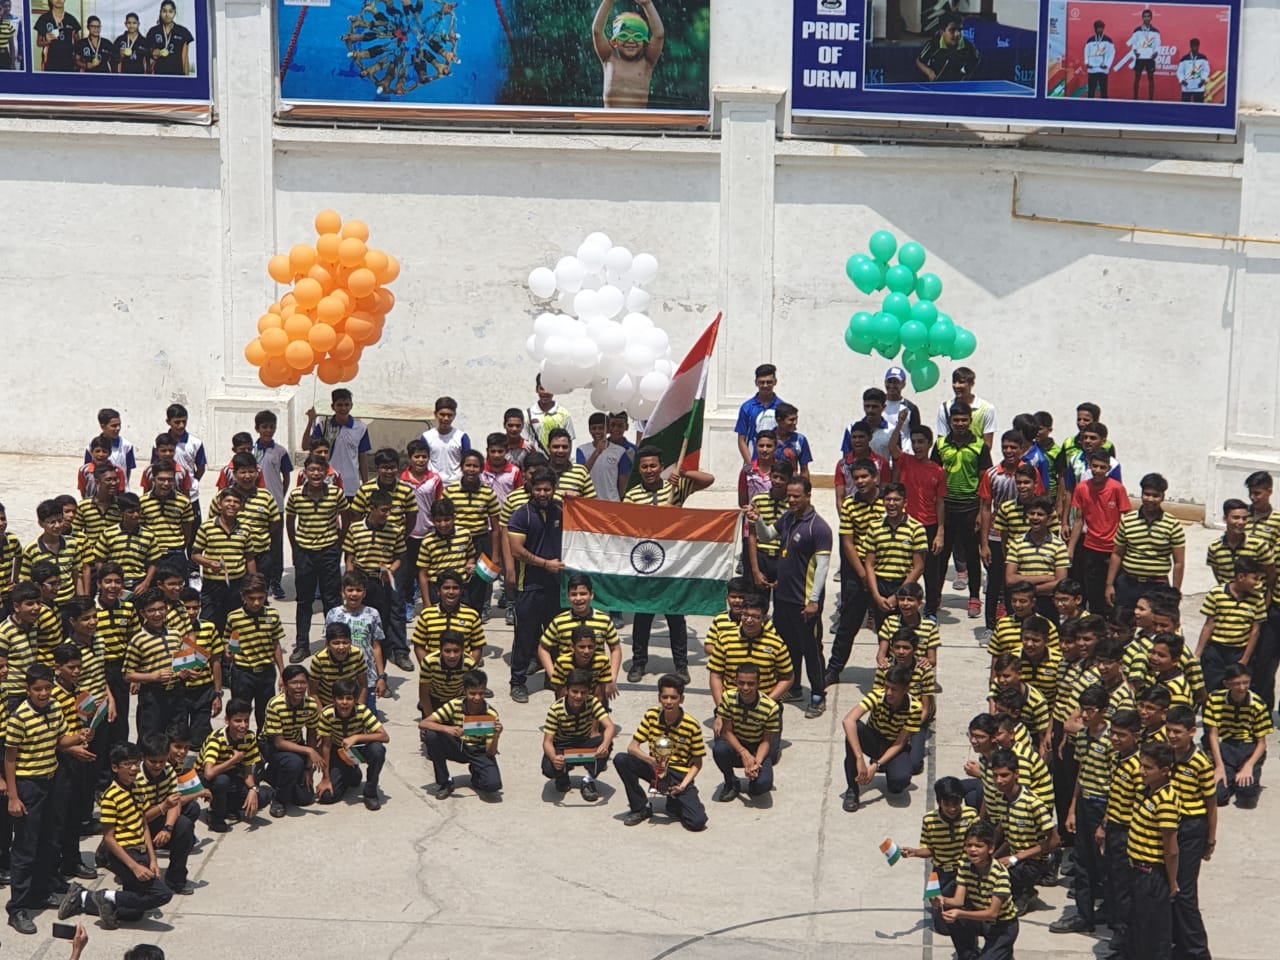 Students of Urmi school Vadodara extend their wishes to Indian Cricket team